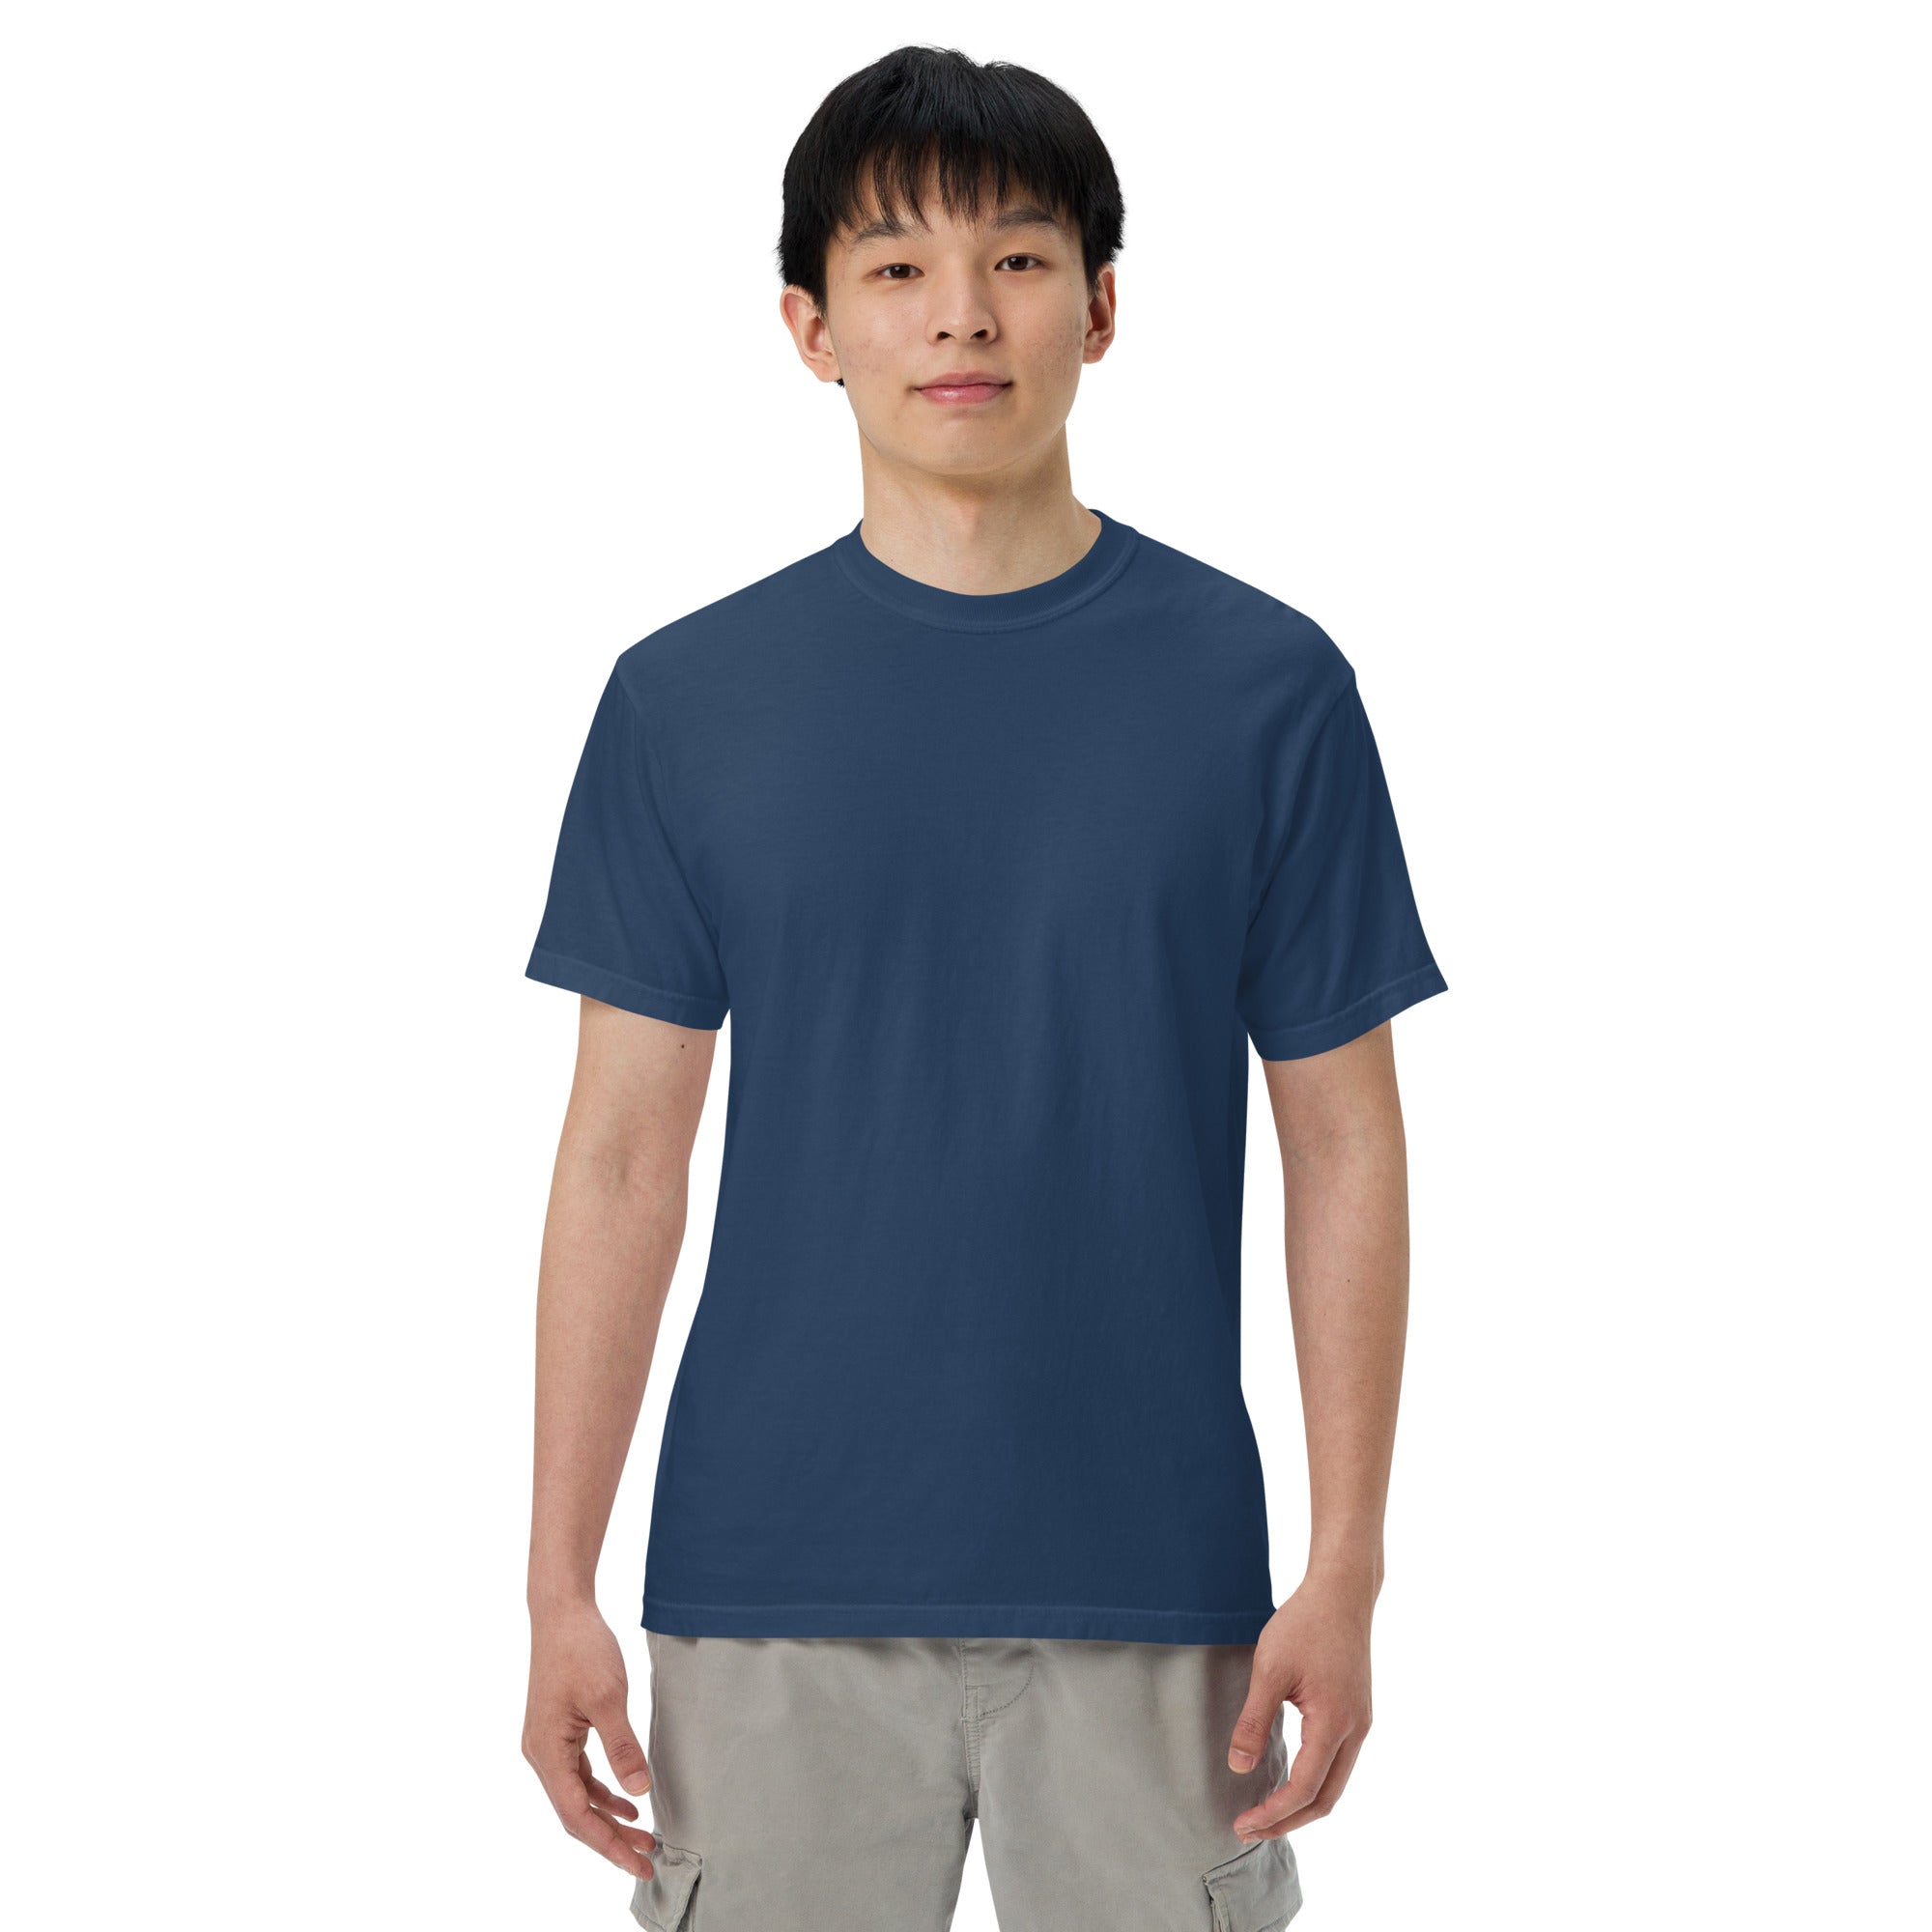 Mackey Mouse™-hey girl-garment-dyed heavyweight t-shirt